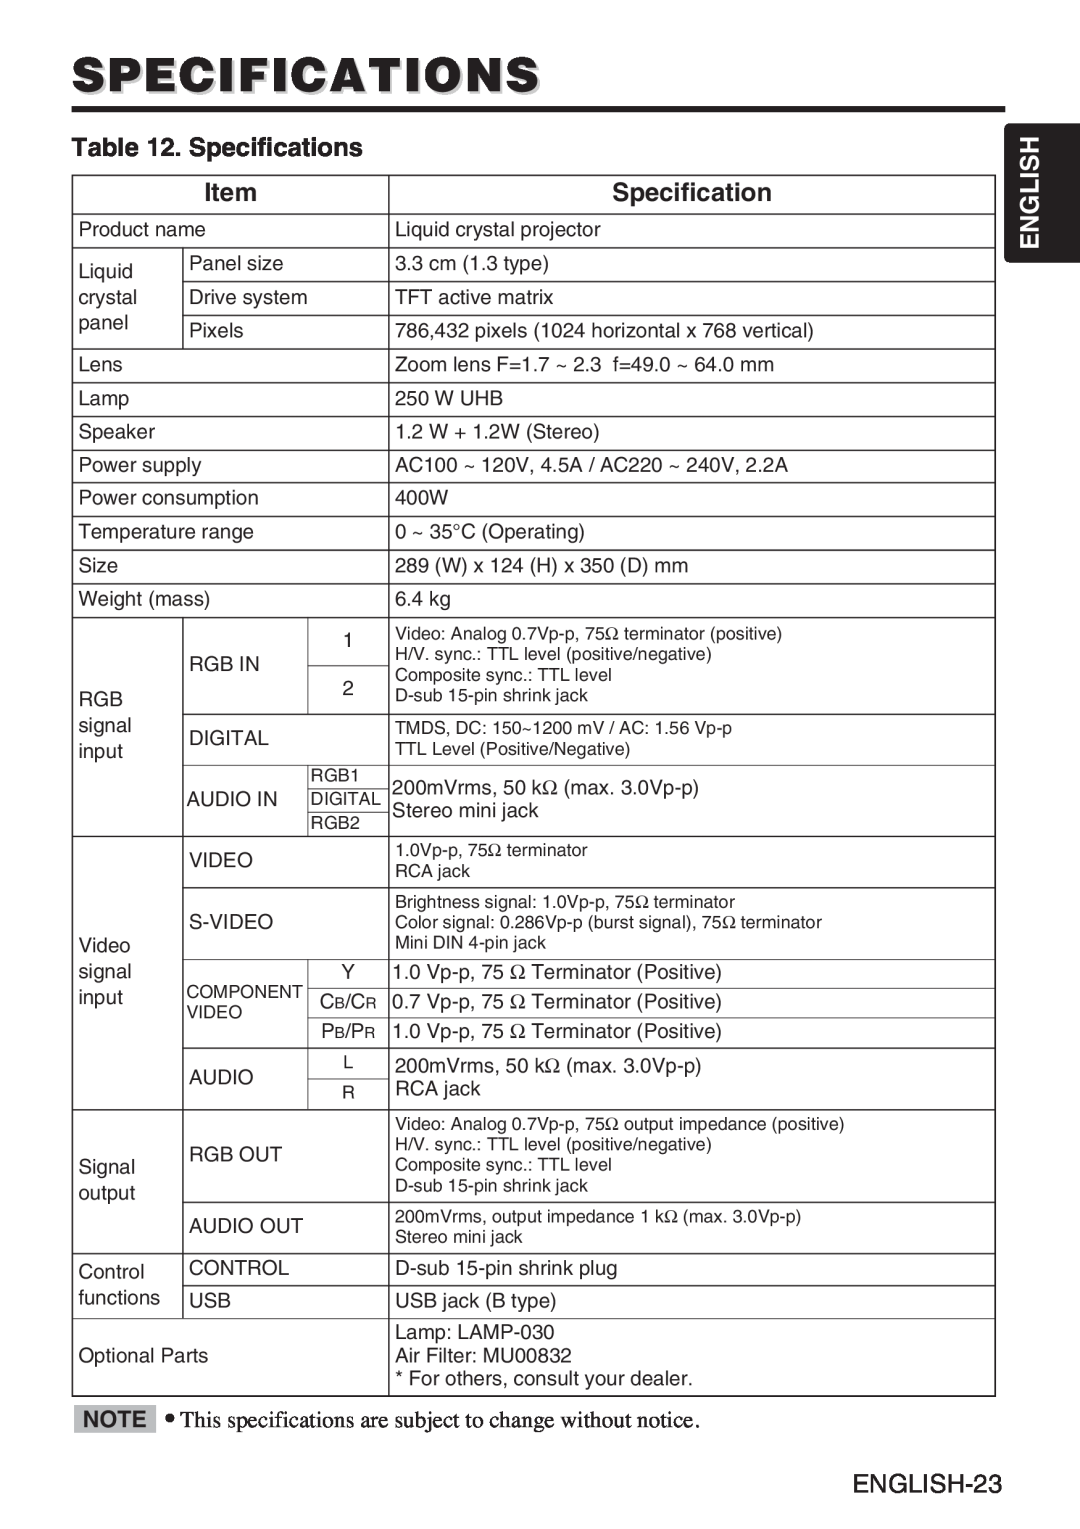 InFocus liquid crystal user manual Specifications, ENGLISH-23, English 